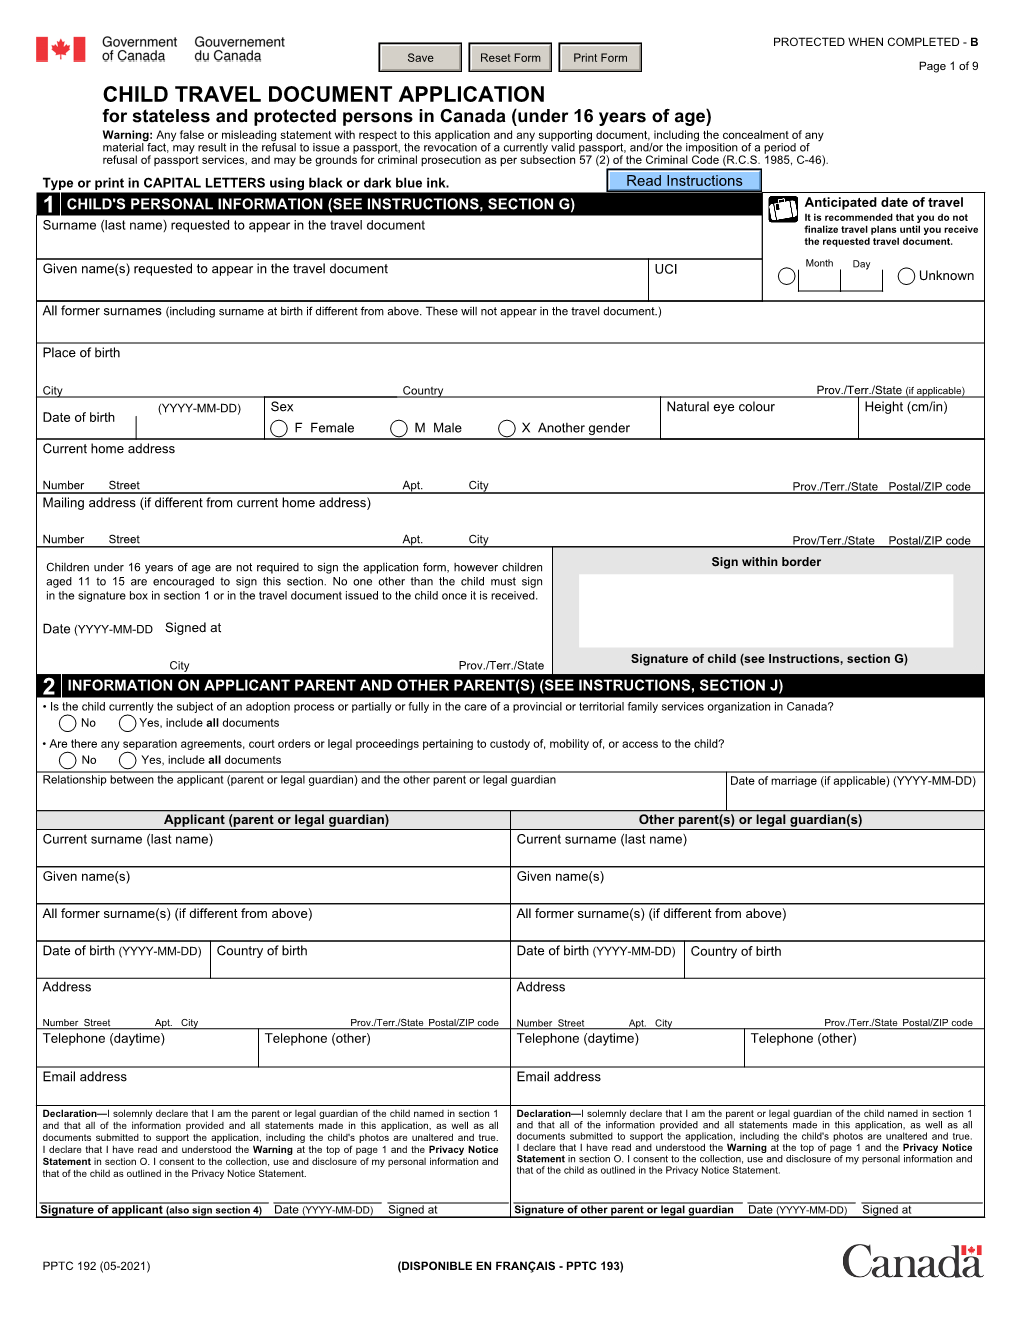 Child Travel Document Application Form [PPTC 192]